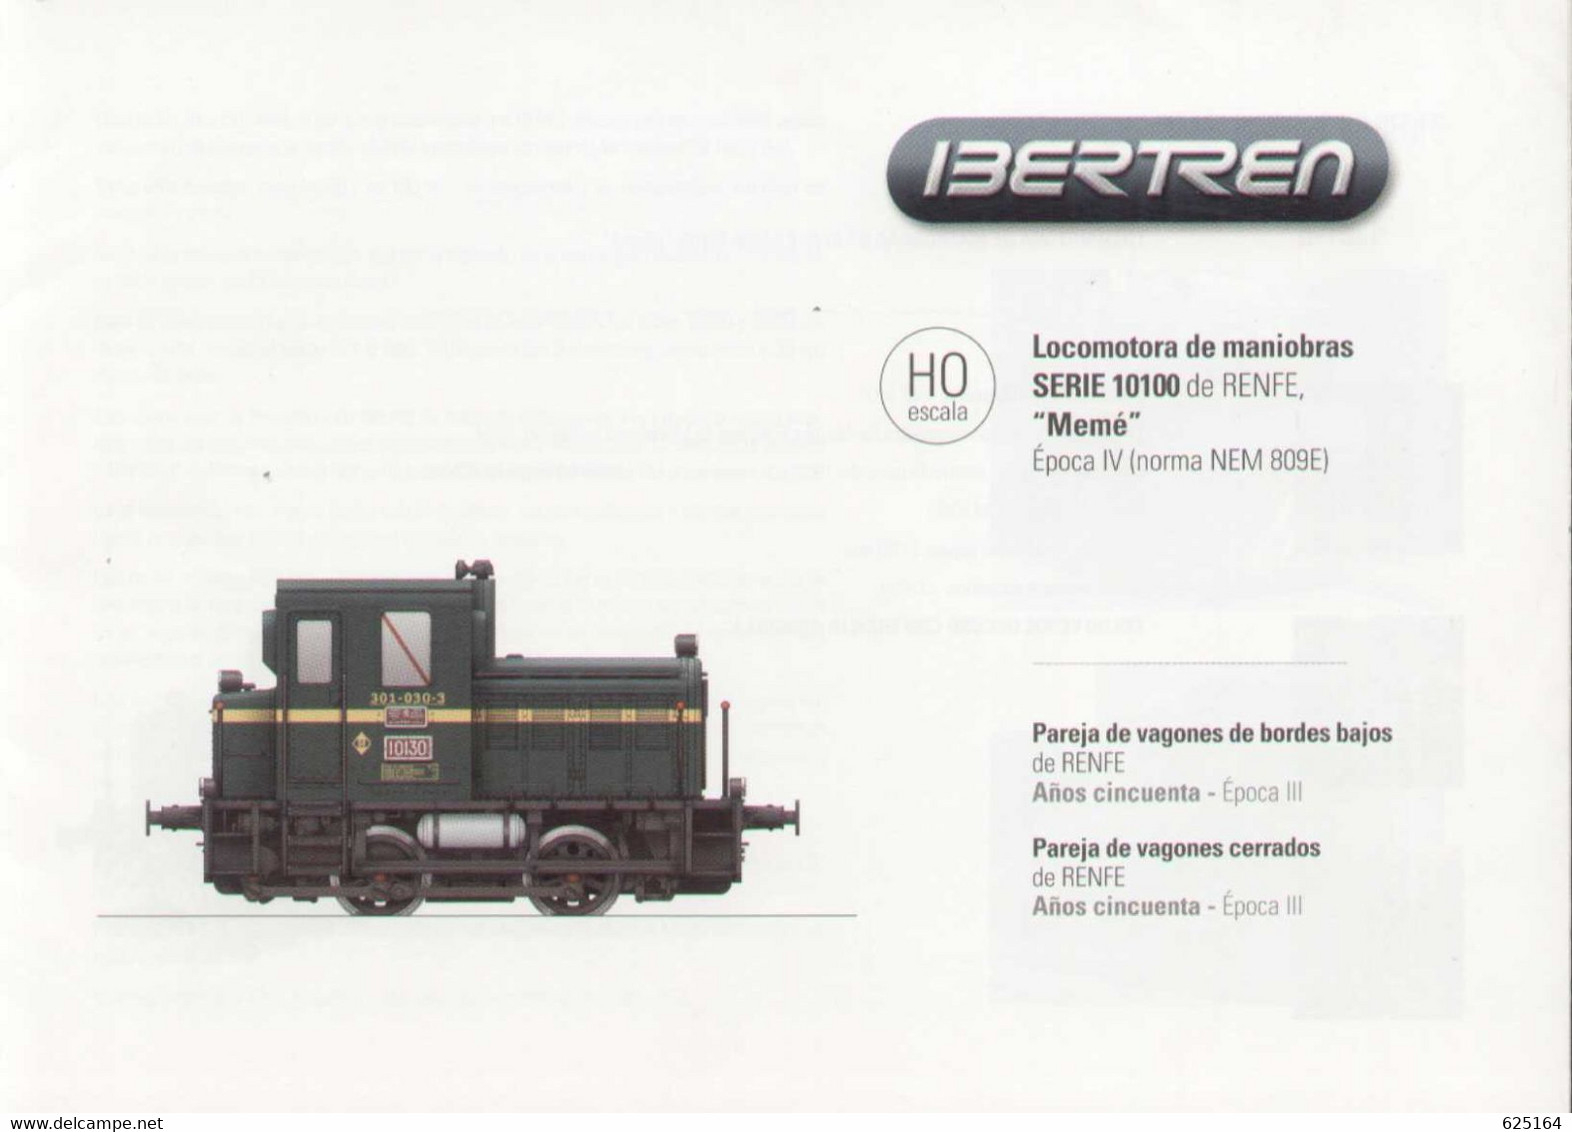 Catalogue IBERTREN 2007 Hoja De Información RENFE 10100 "Memé" HO -en Suédois - Unclassified